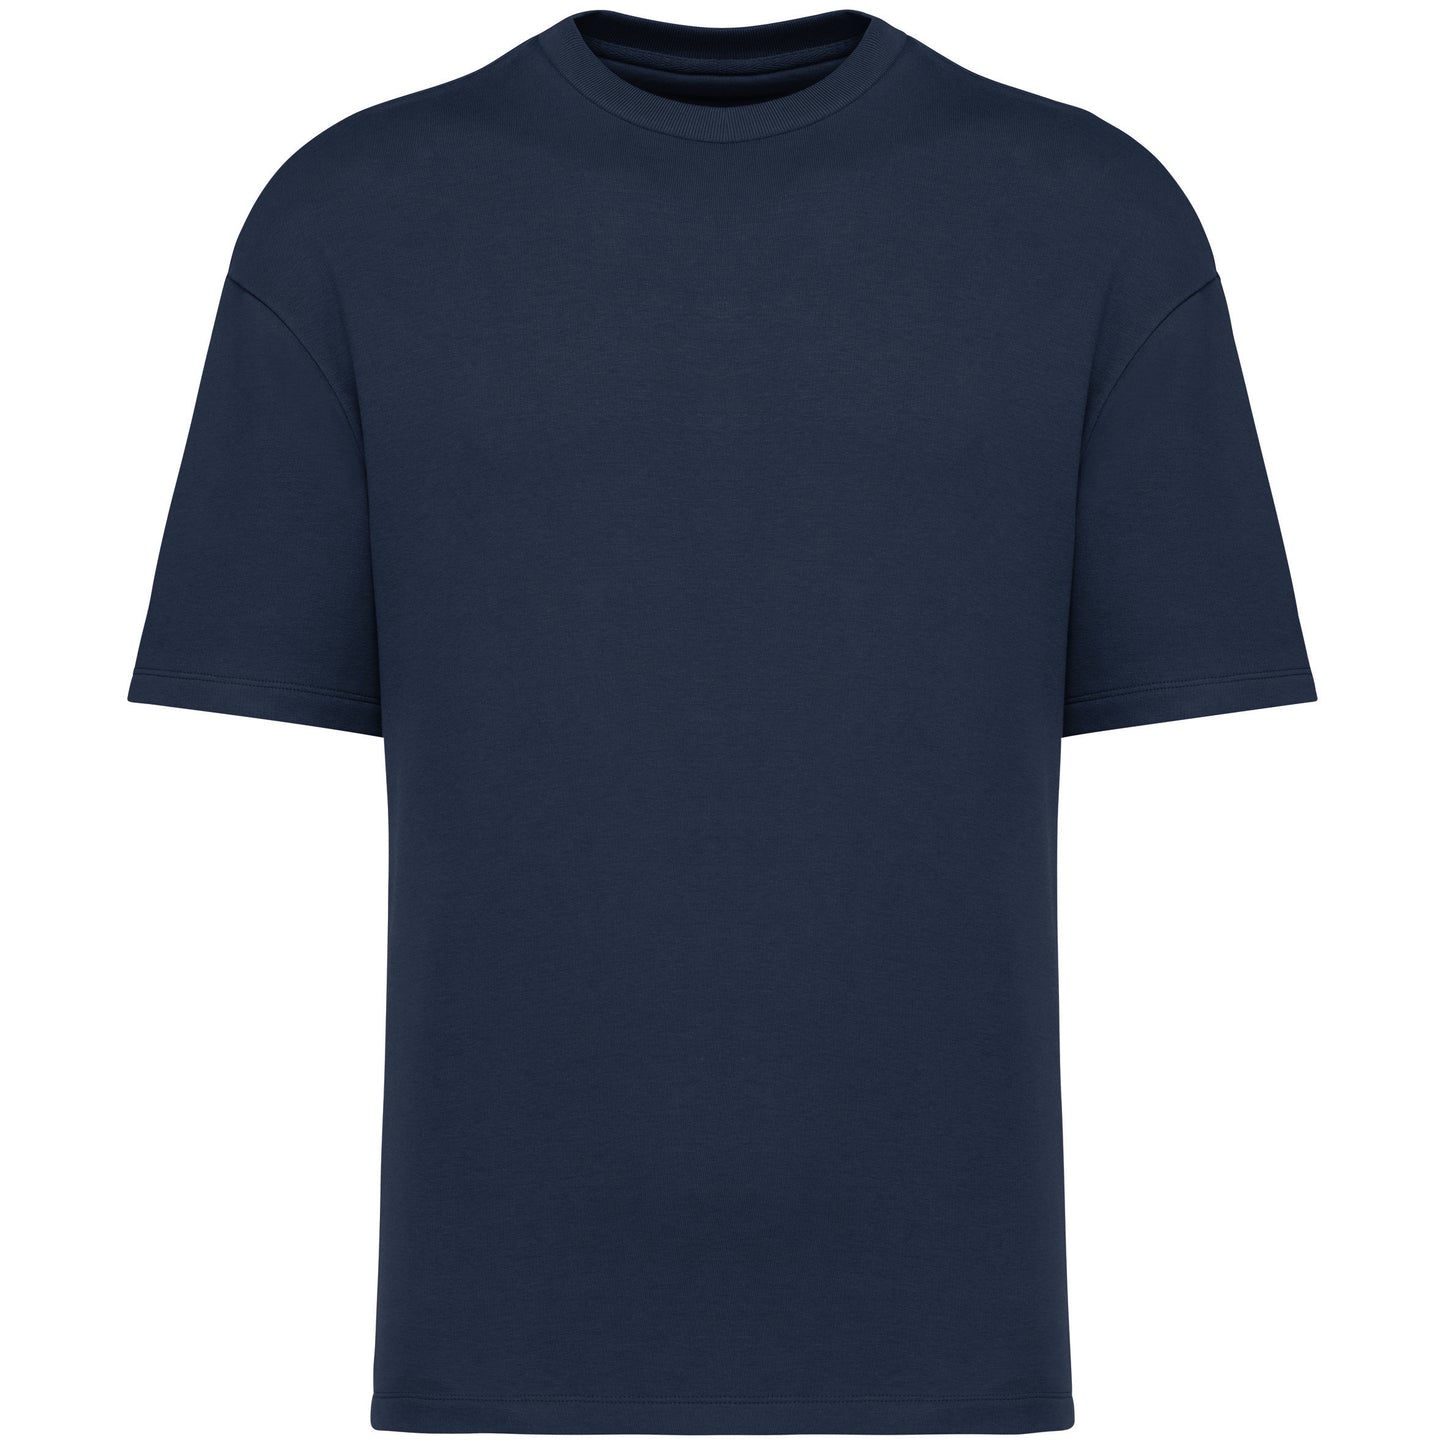 T-Shirt oversize unissexo